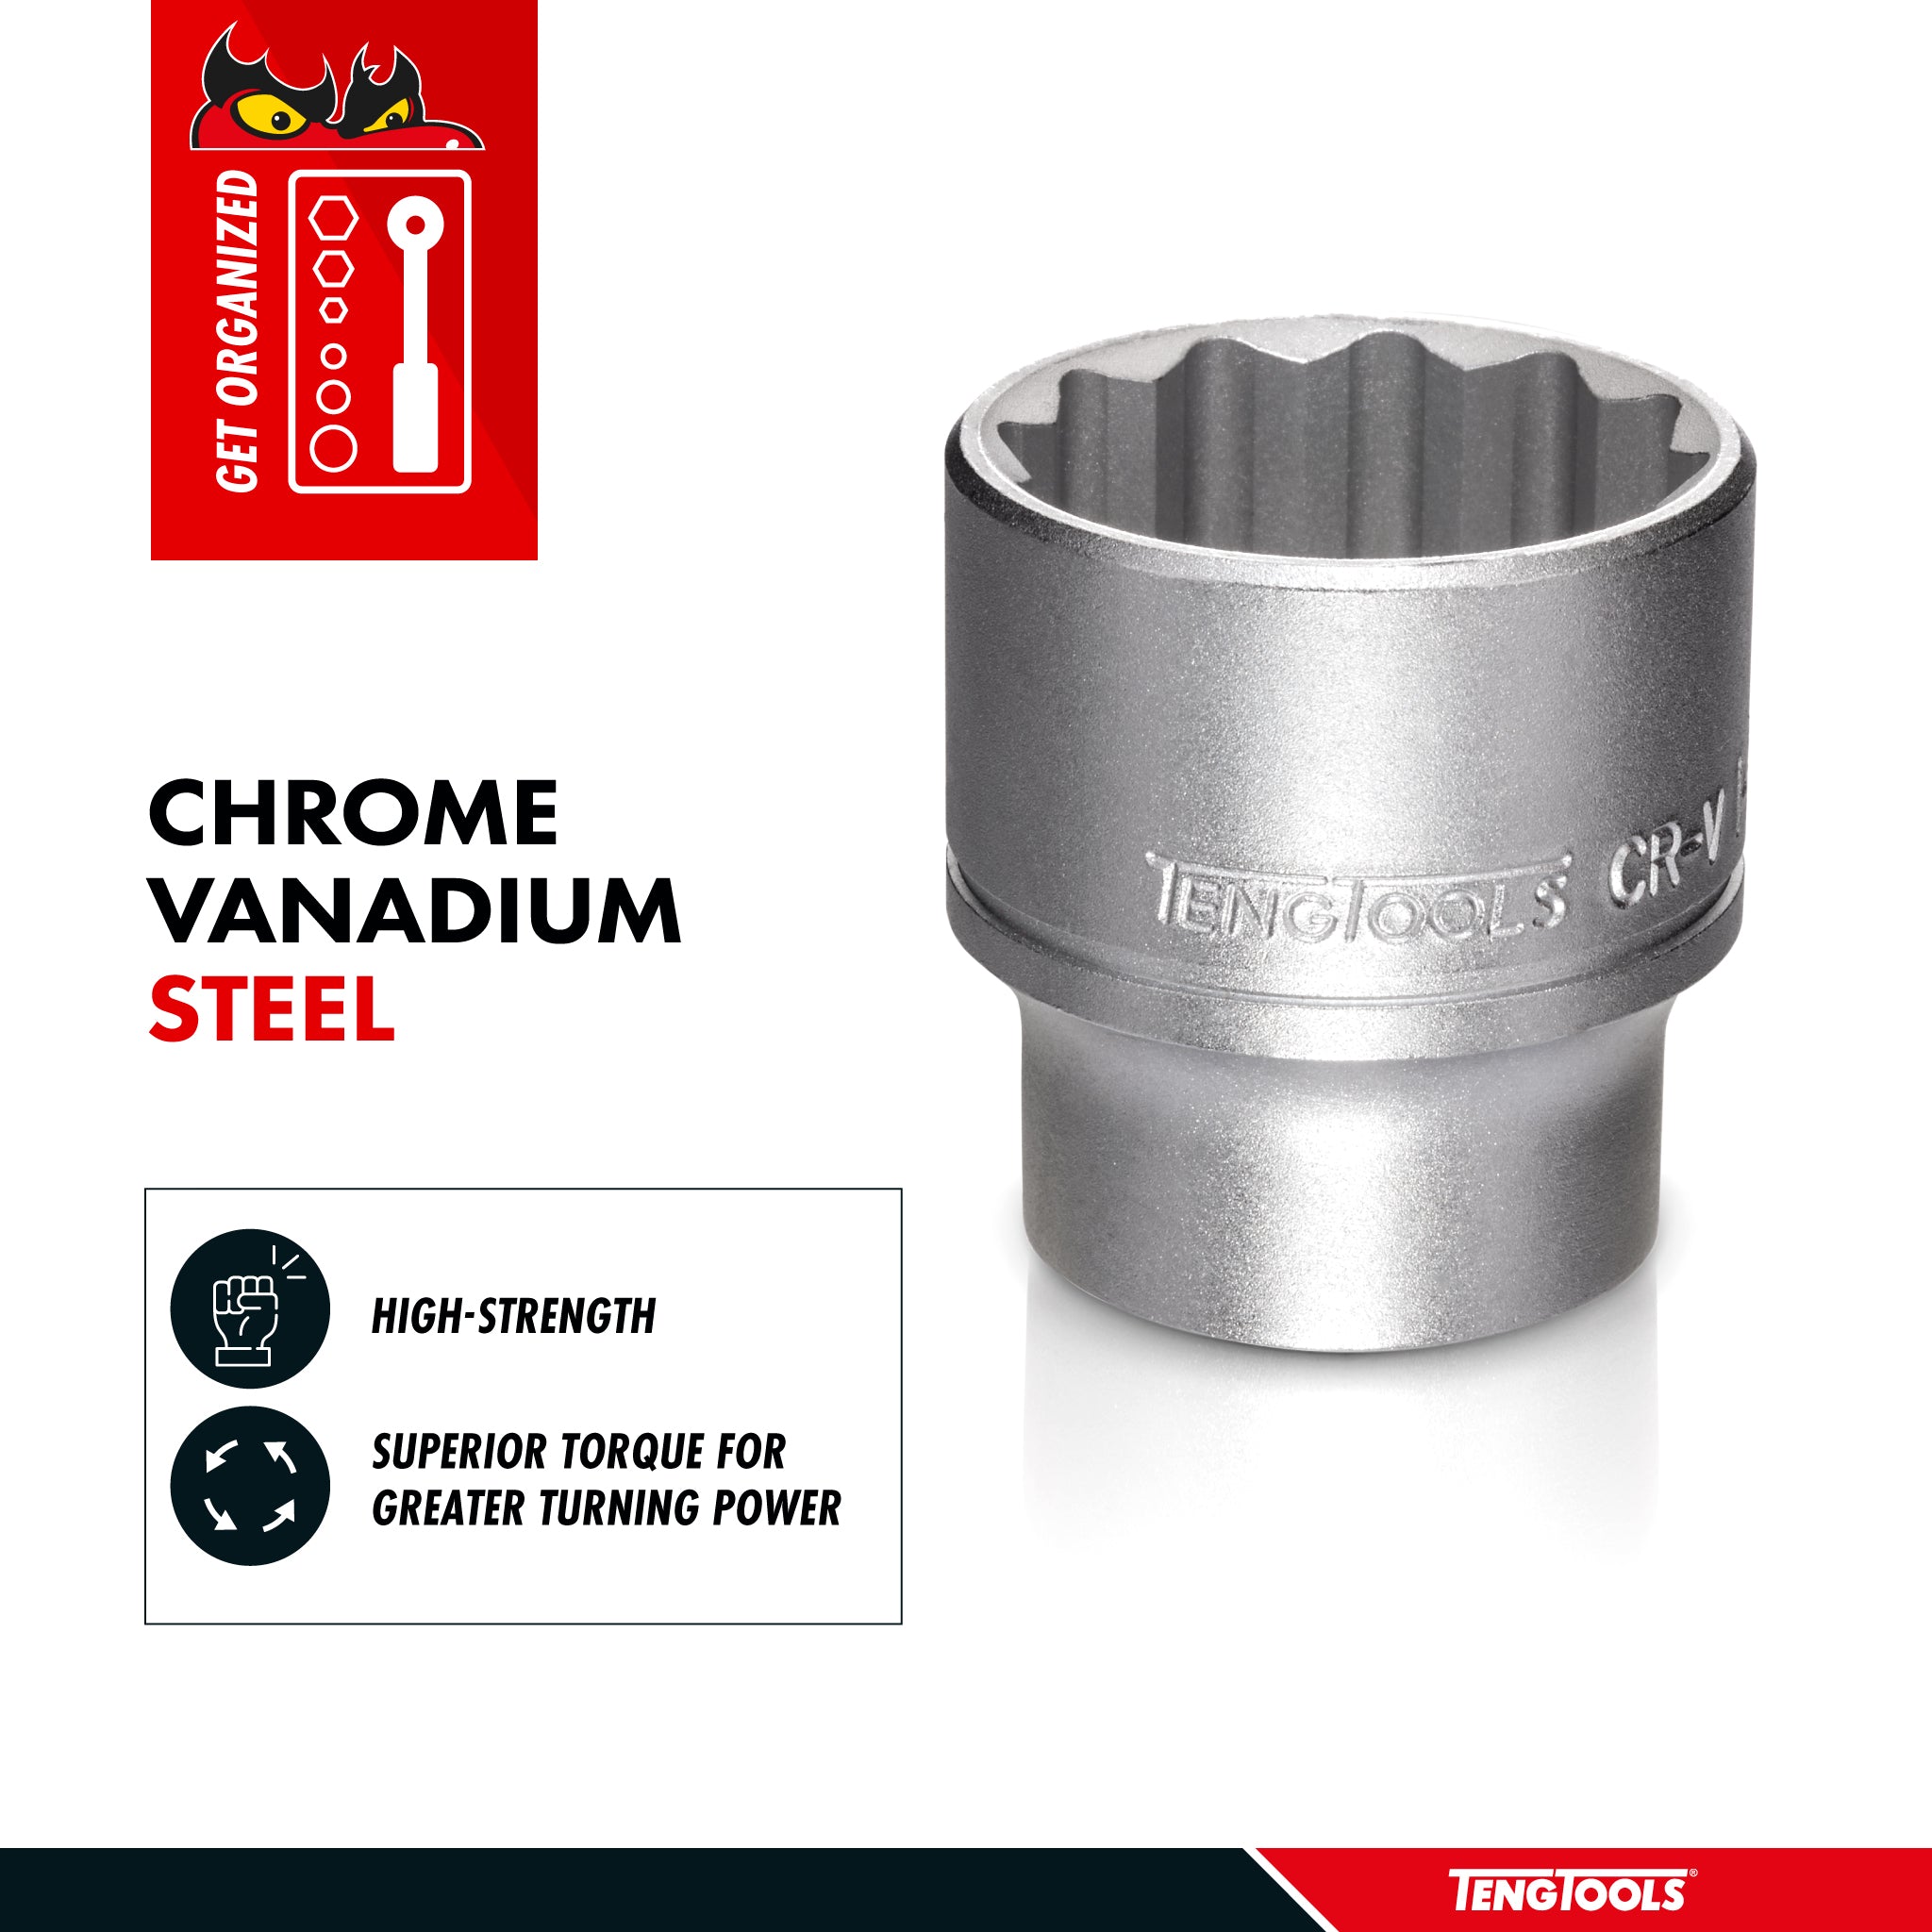 Teng Tools 1/2 Inch Drive 12 Point Metric Shallow Chrome Vanadium Sockets - 13mm